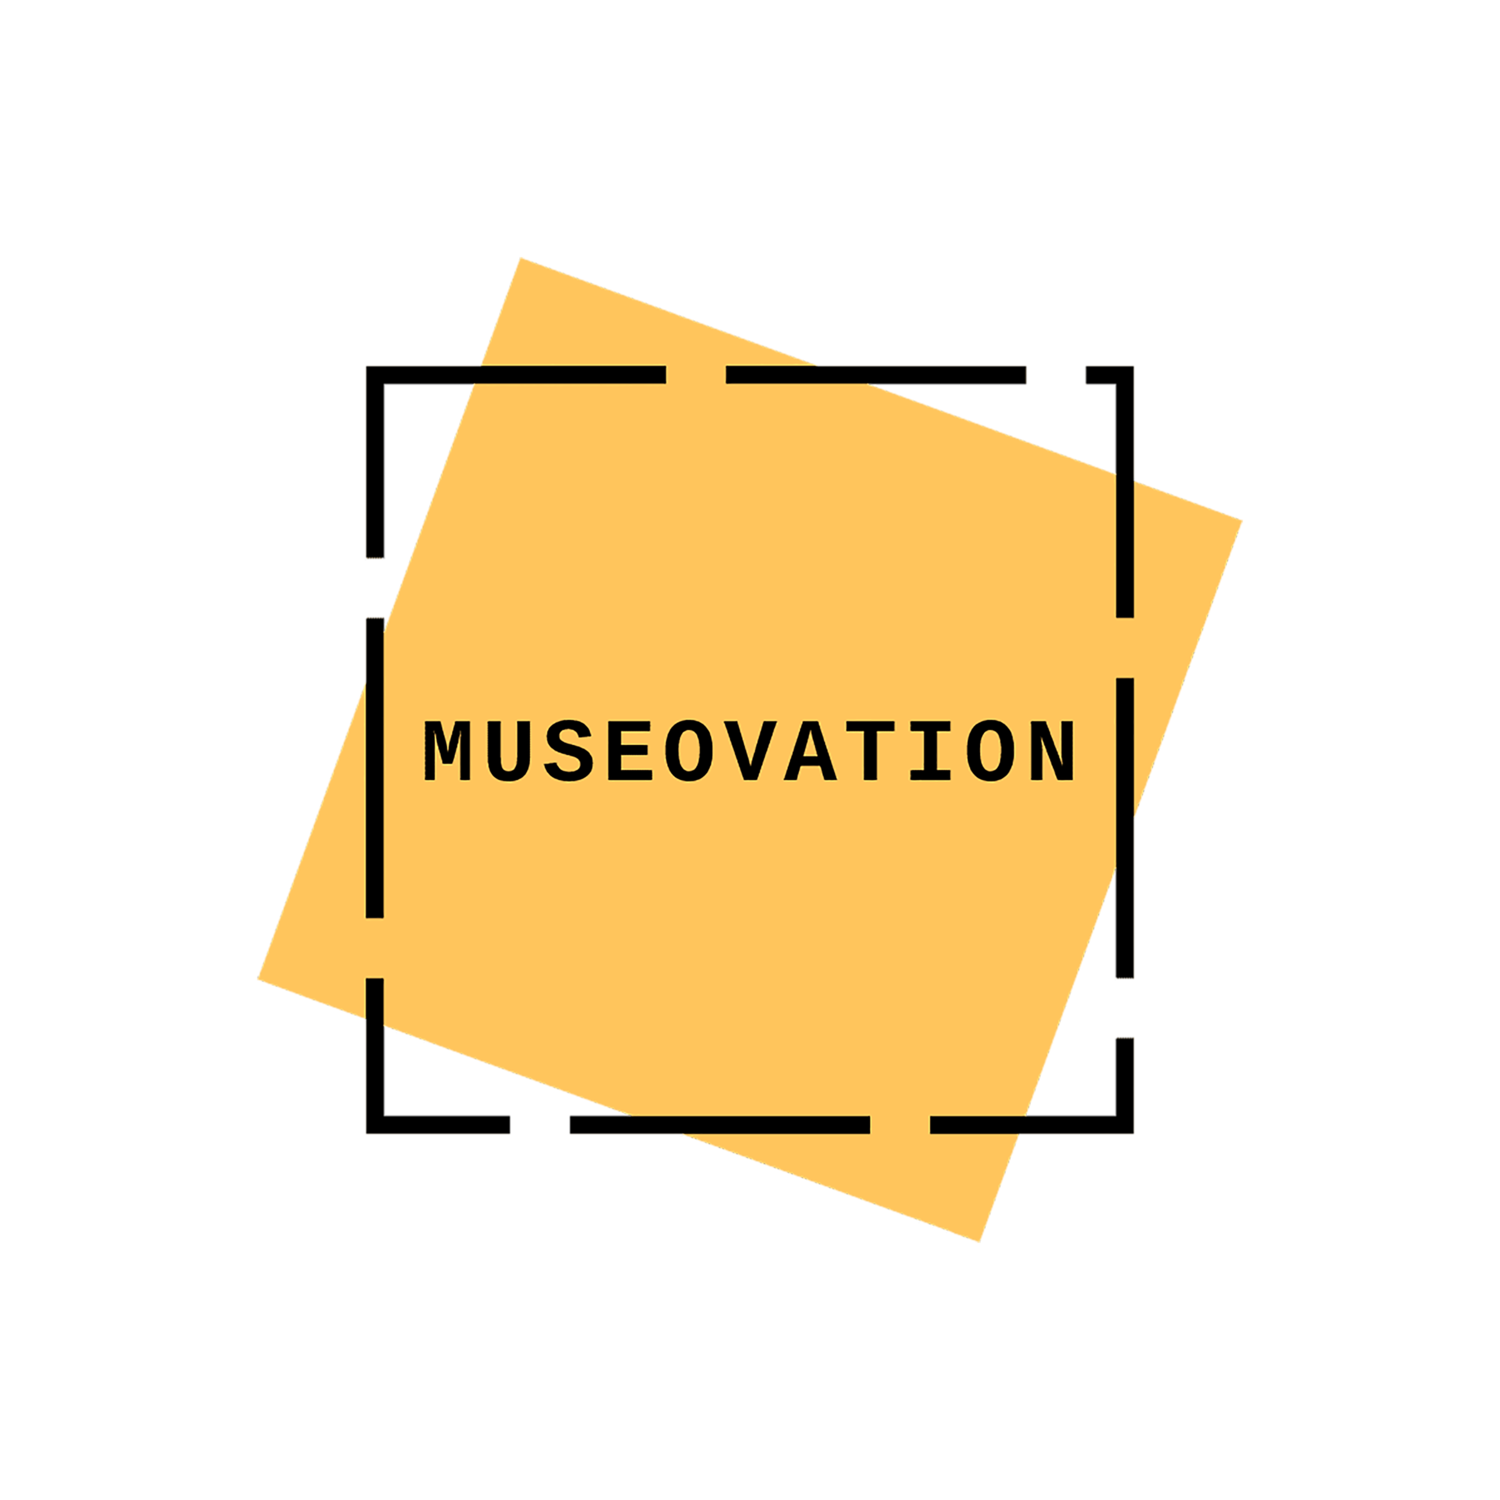 Museovation